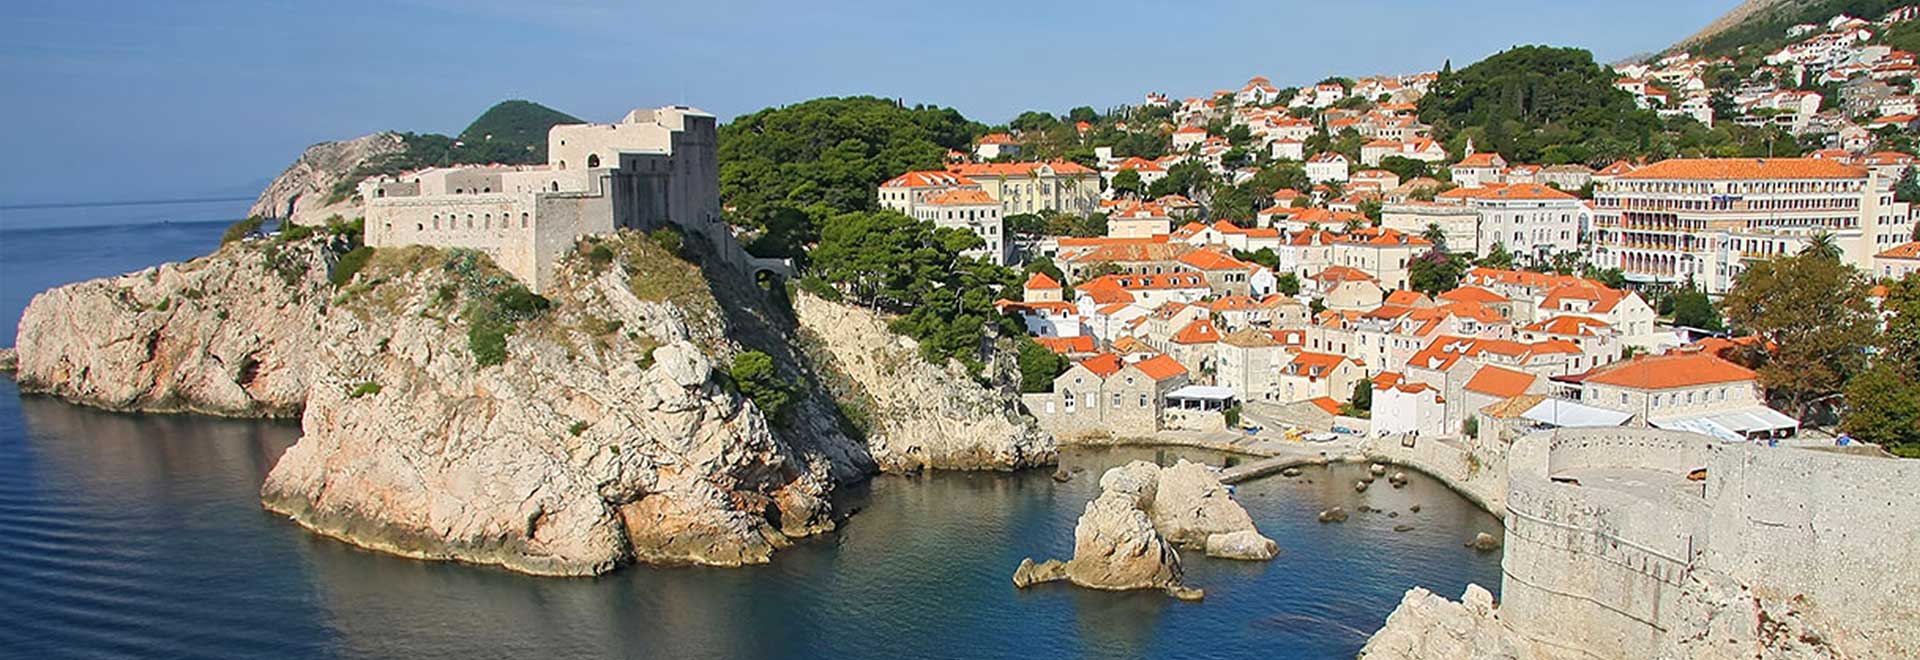 Europe Signature Croatia Dubrovnik MH